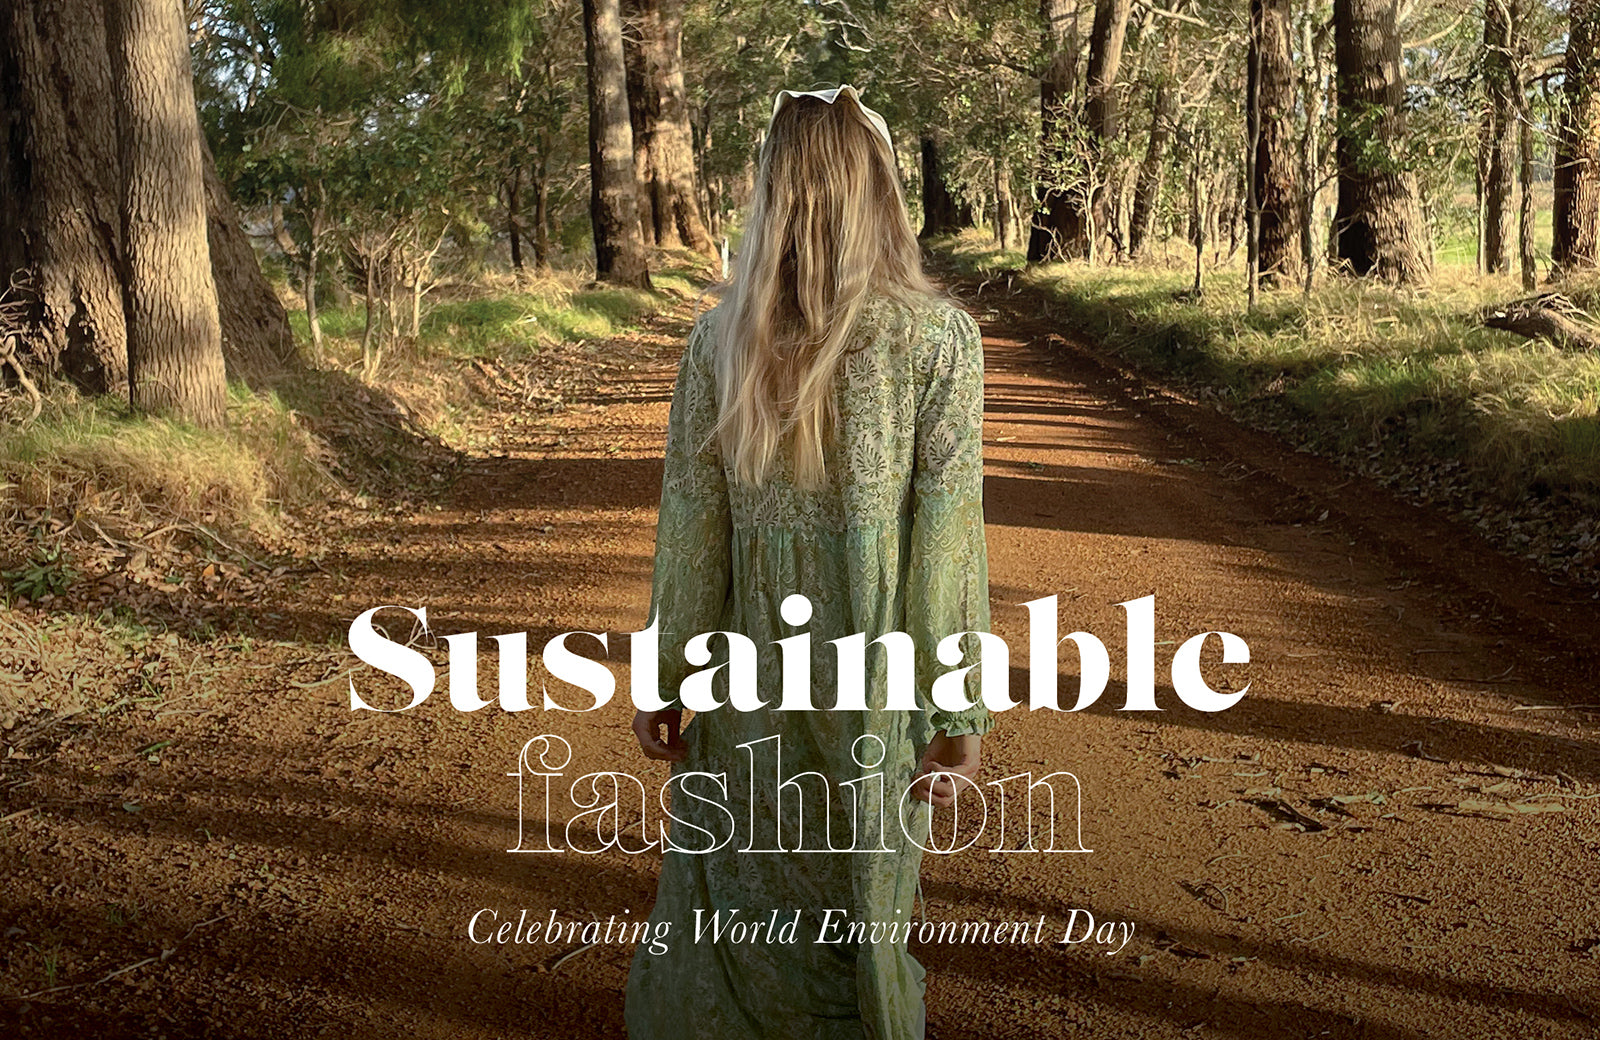 Celebrating World Environment day